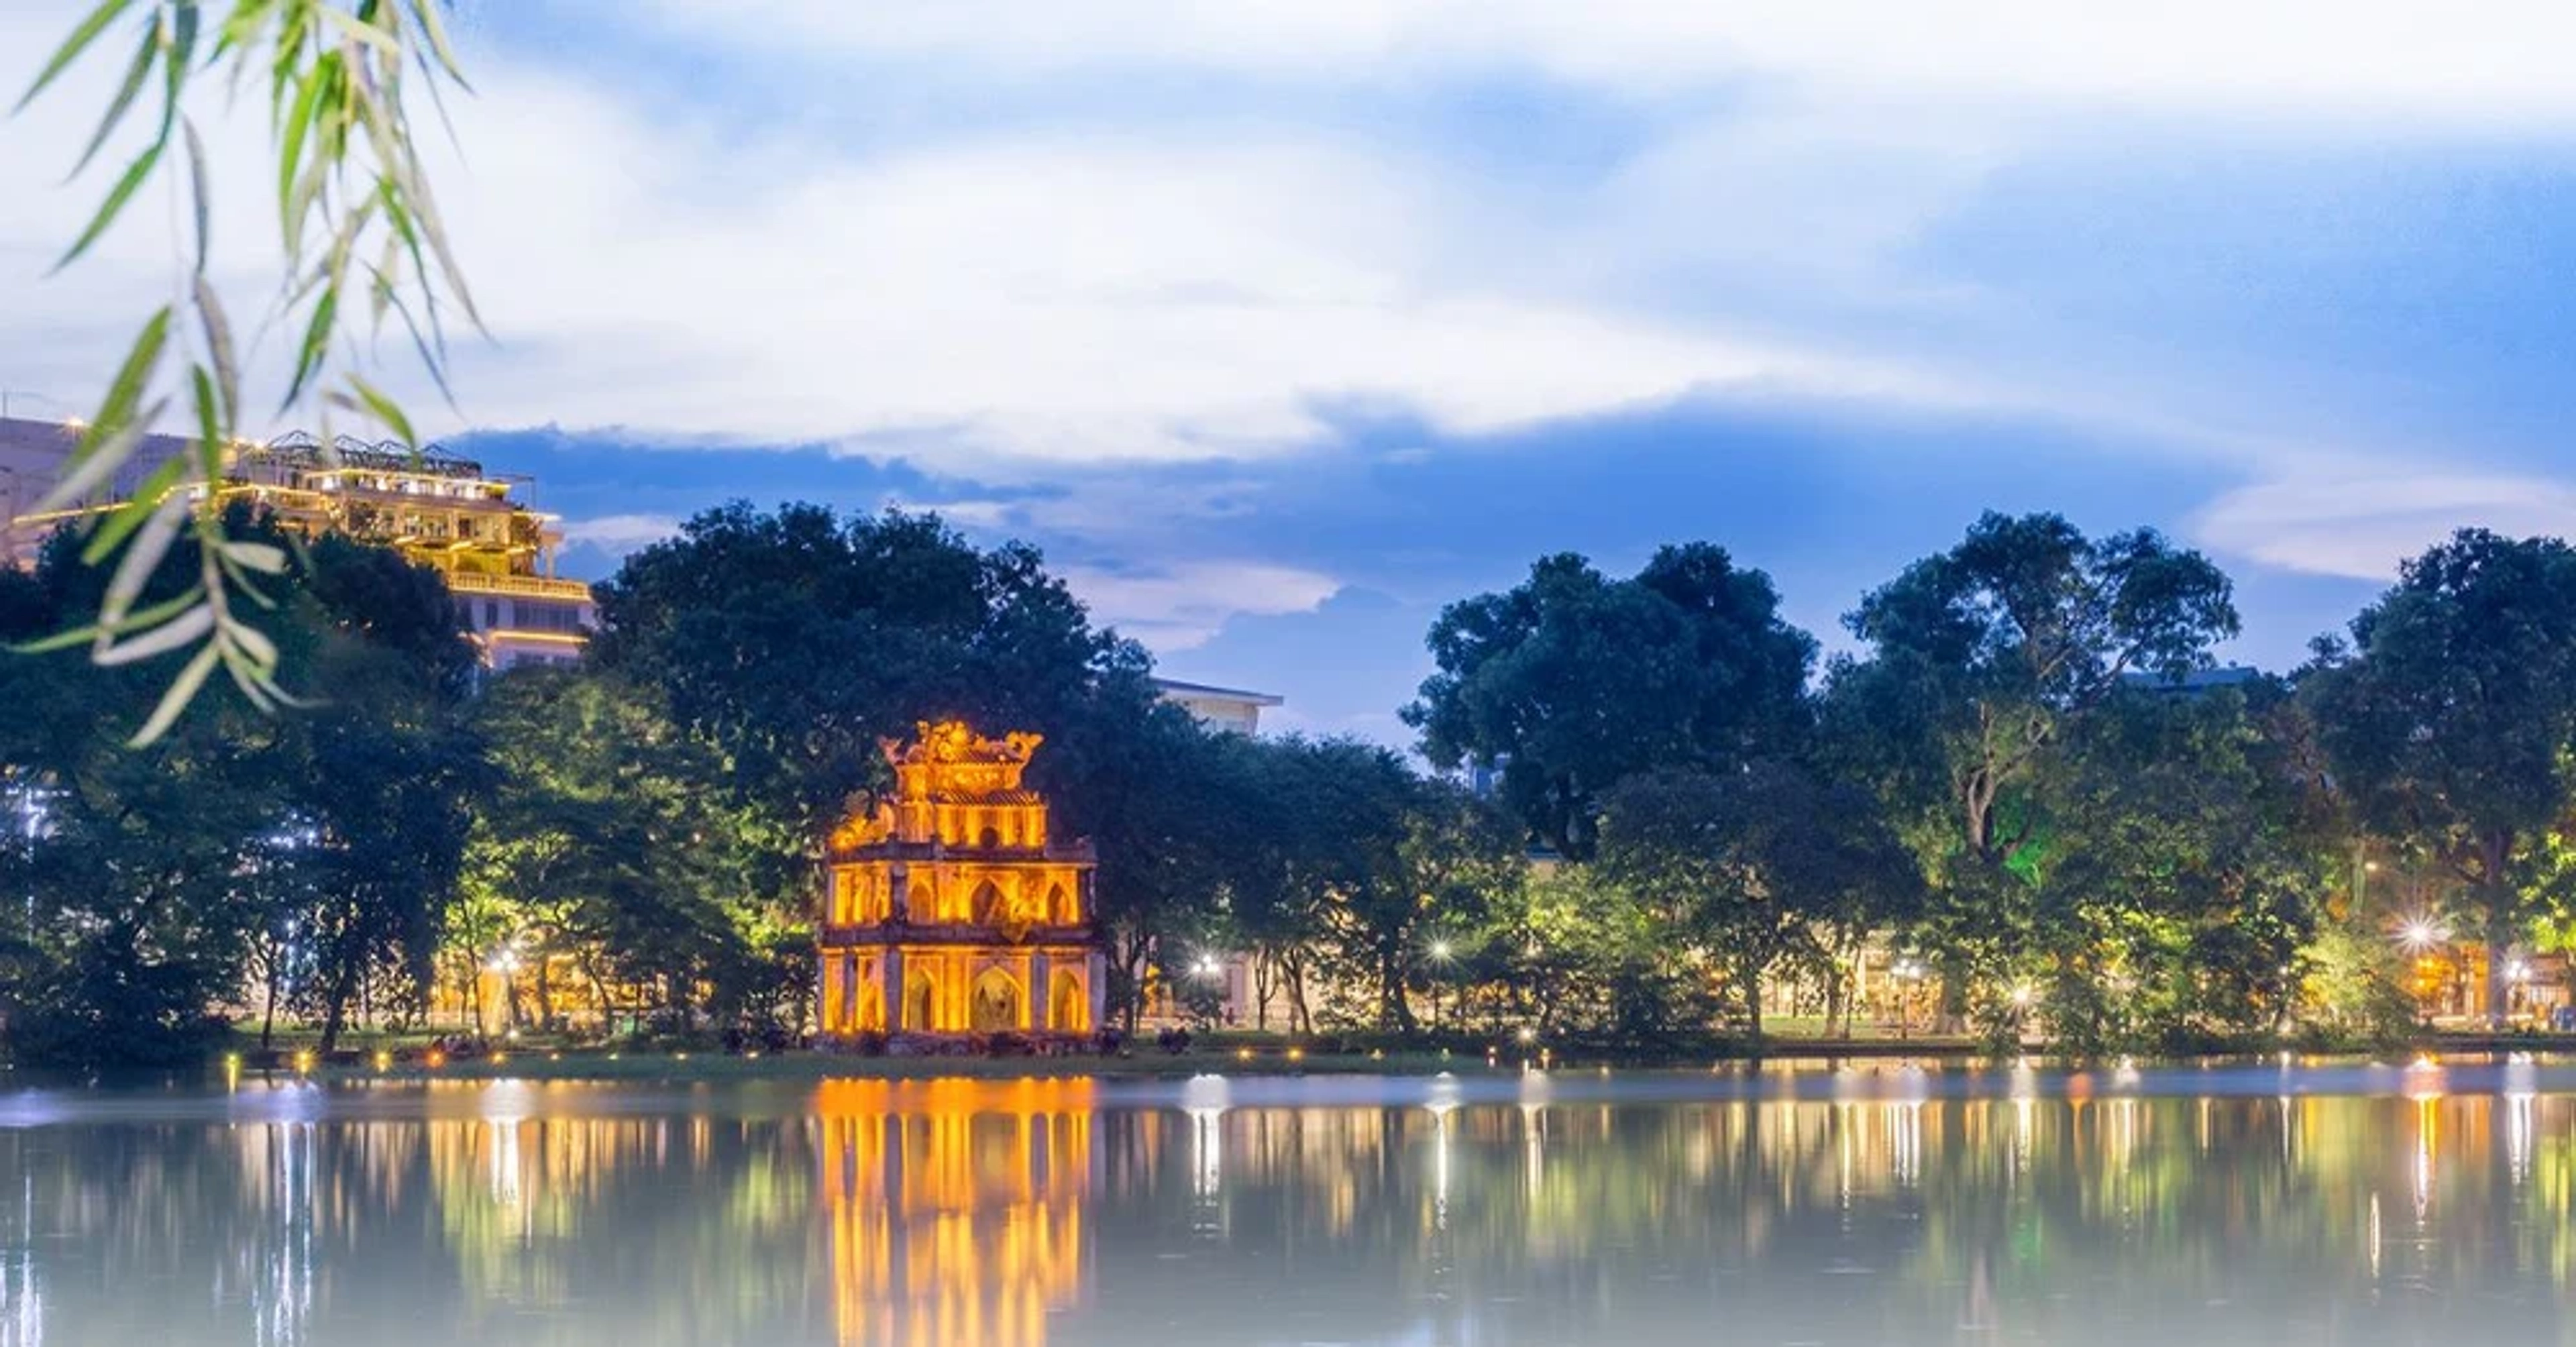 Hoan Kiem Lake - A Historical and Cultural Symbol of Vietnam's Capital